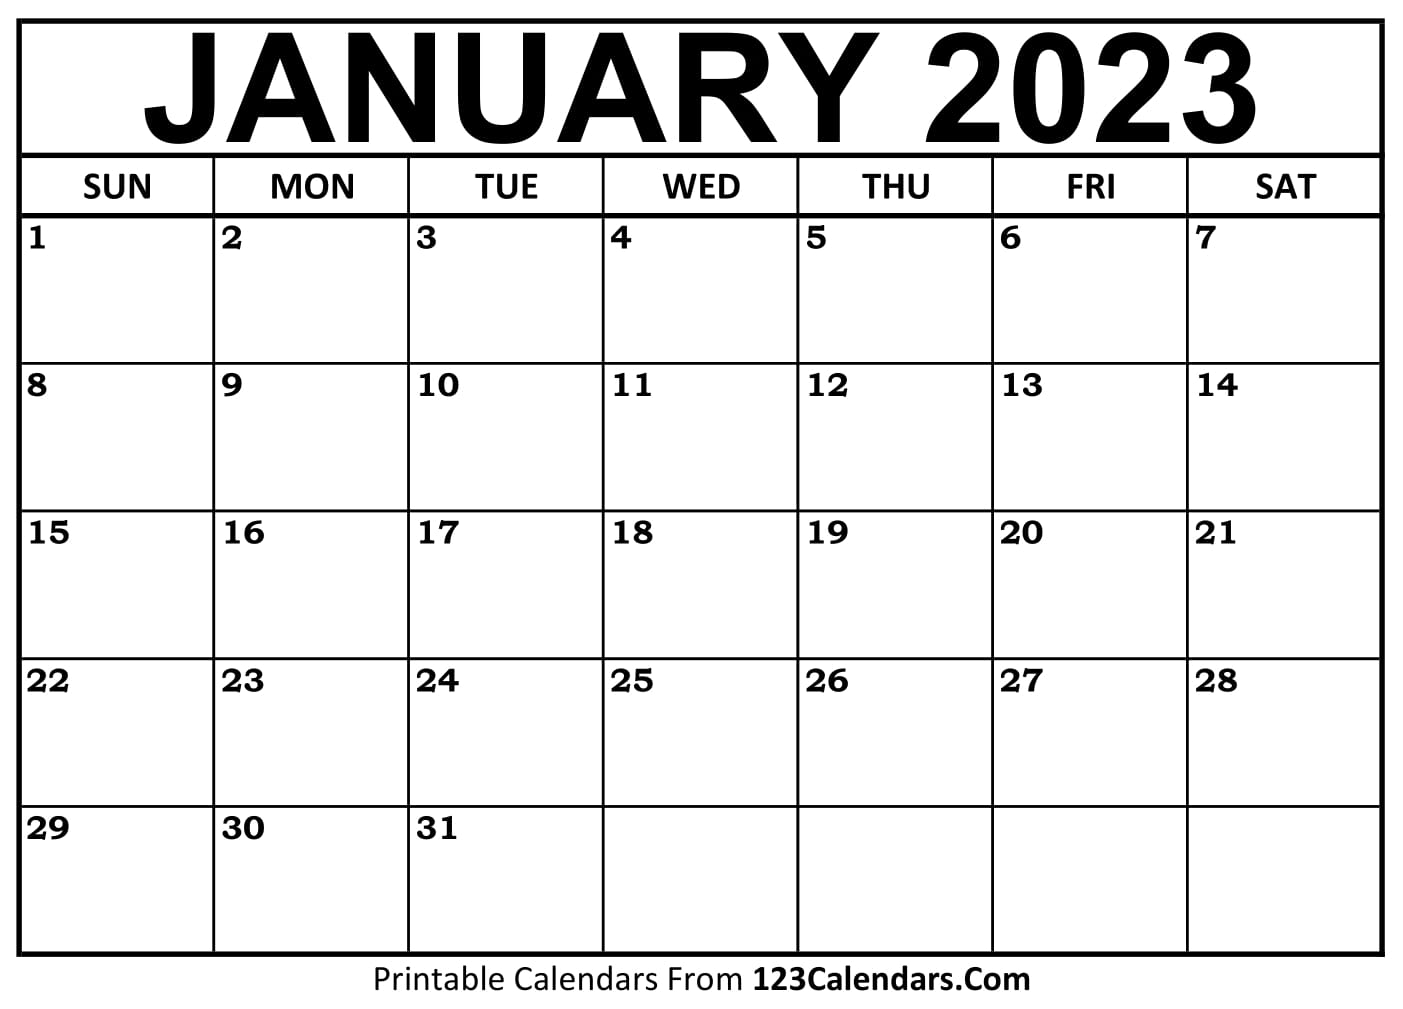 printable-january-2023-calendar-templates-123calendars